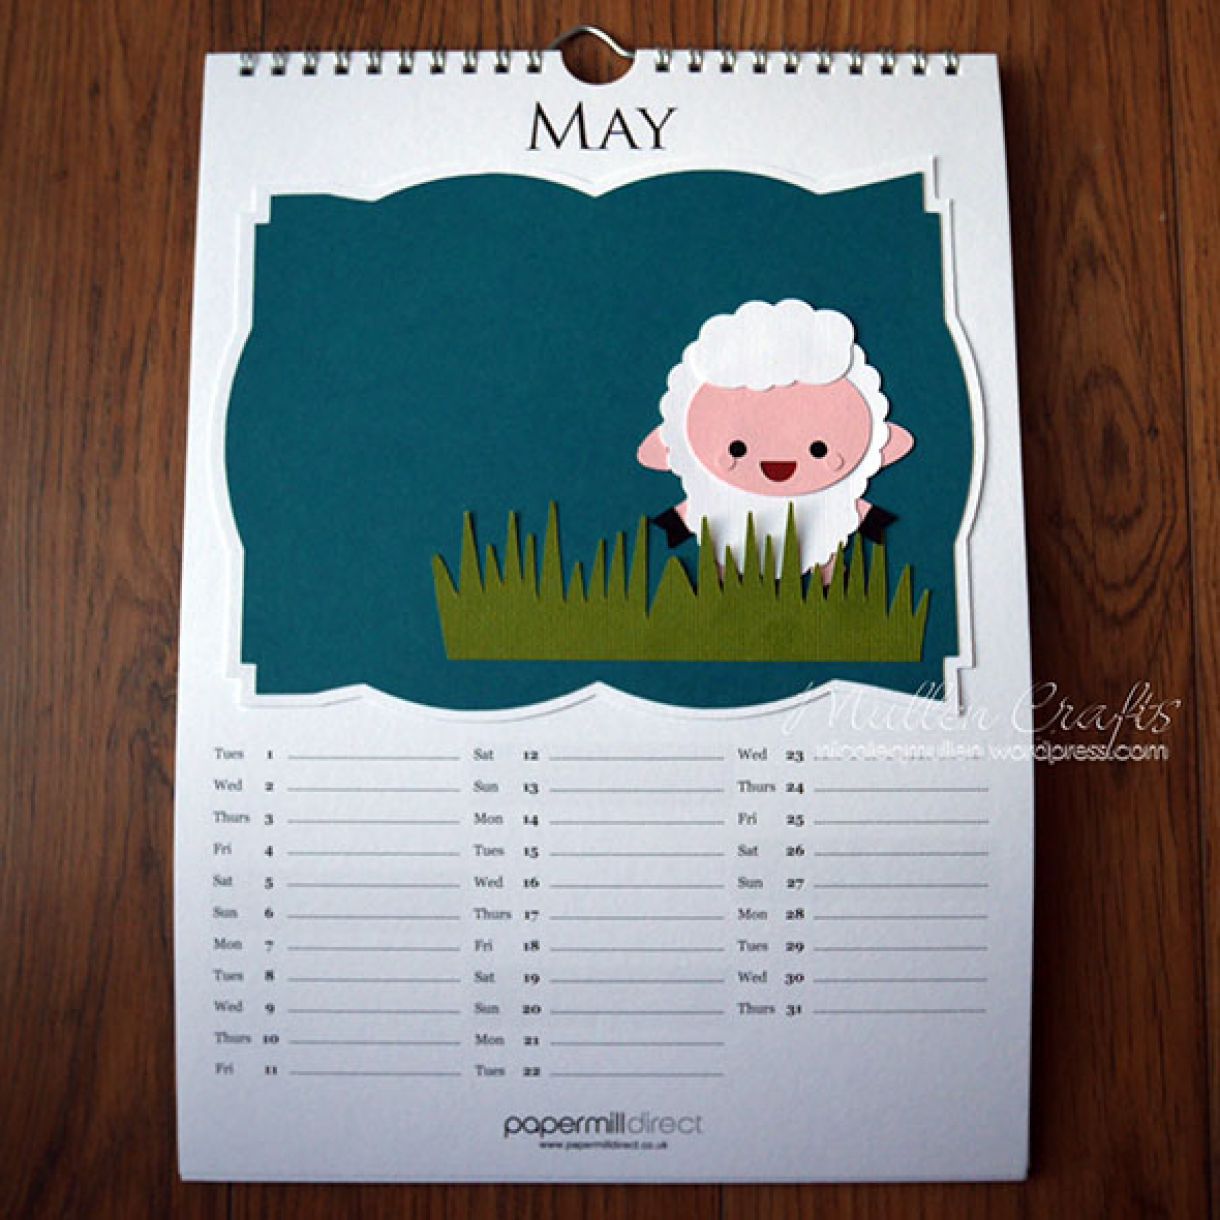 Nicole 2018 Calendar May1